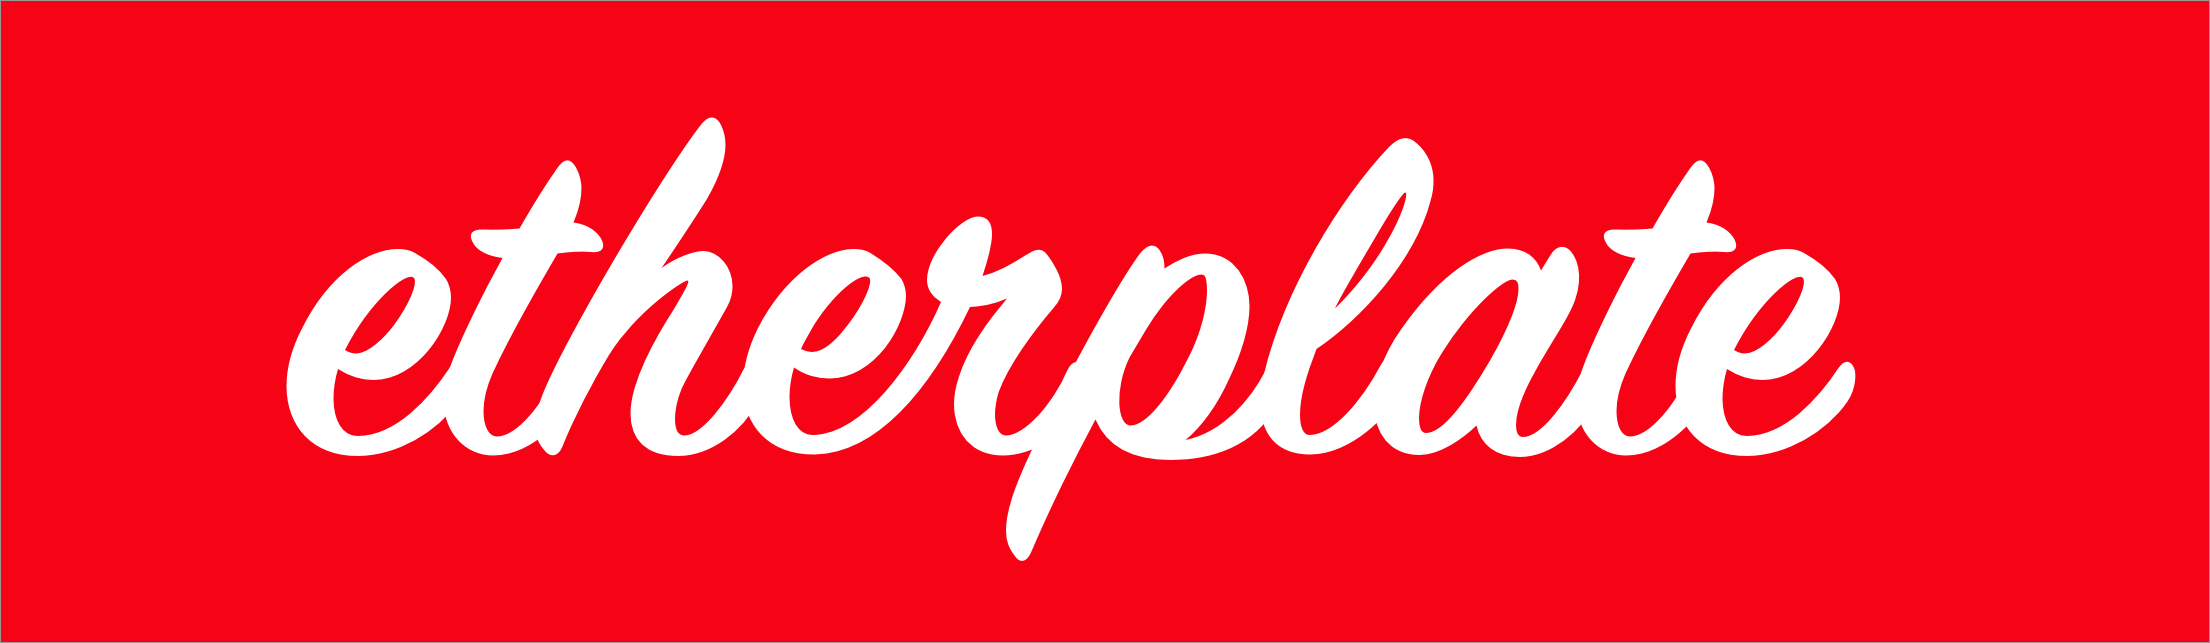 etherplate red block logo